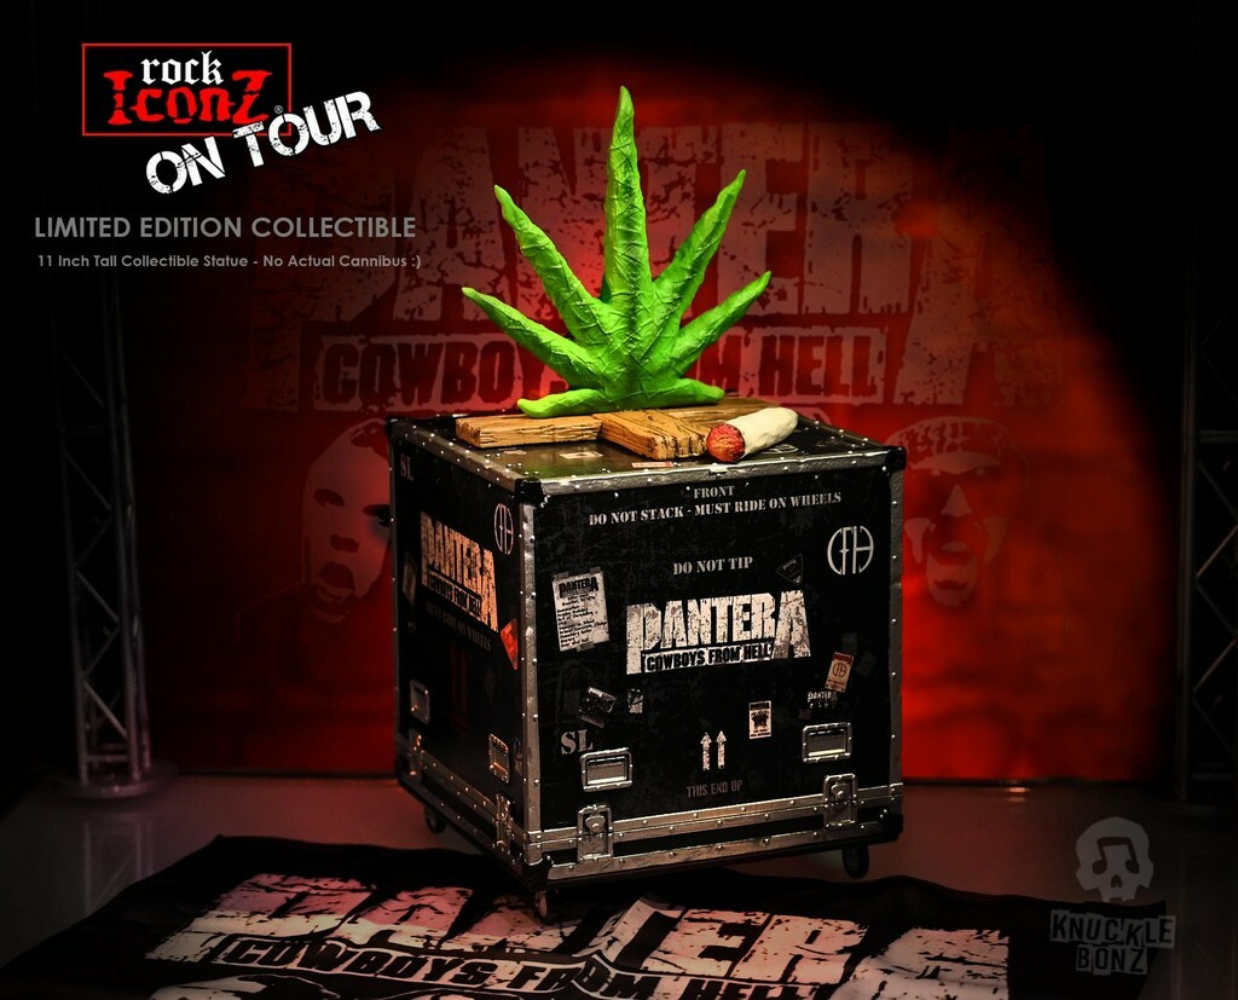 Knucklebonz Rock Iconz Pantera Cowboys from Hell Road Case and Stage Backdrop Set Knucklebonz Rock Iconz 2